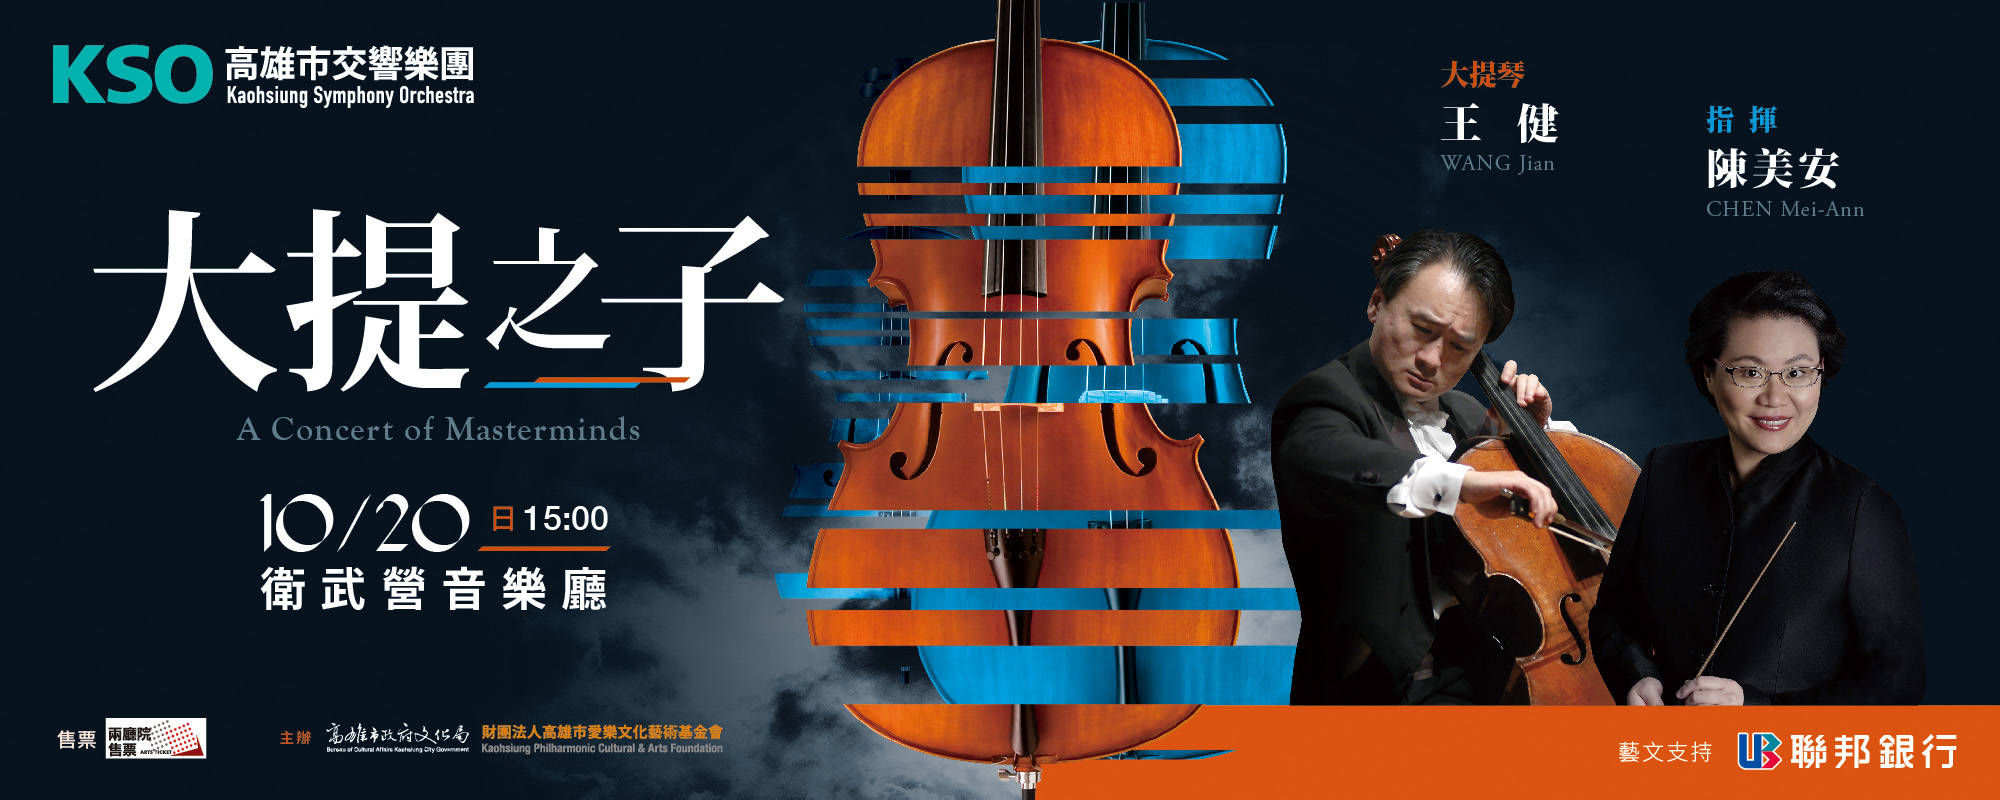 A Concert of Masterminds: CHEN, Mei-Ann, WANG Jian and KSO